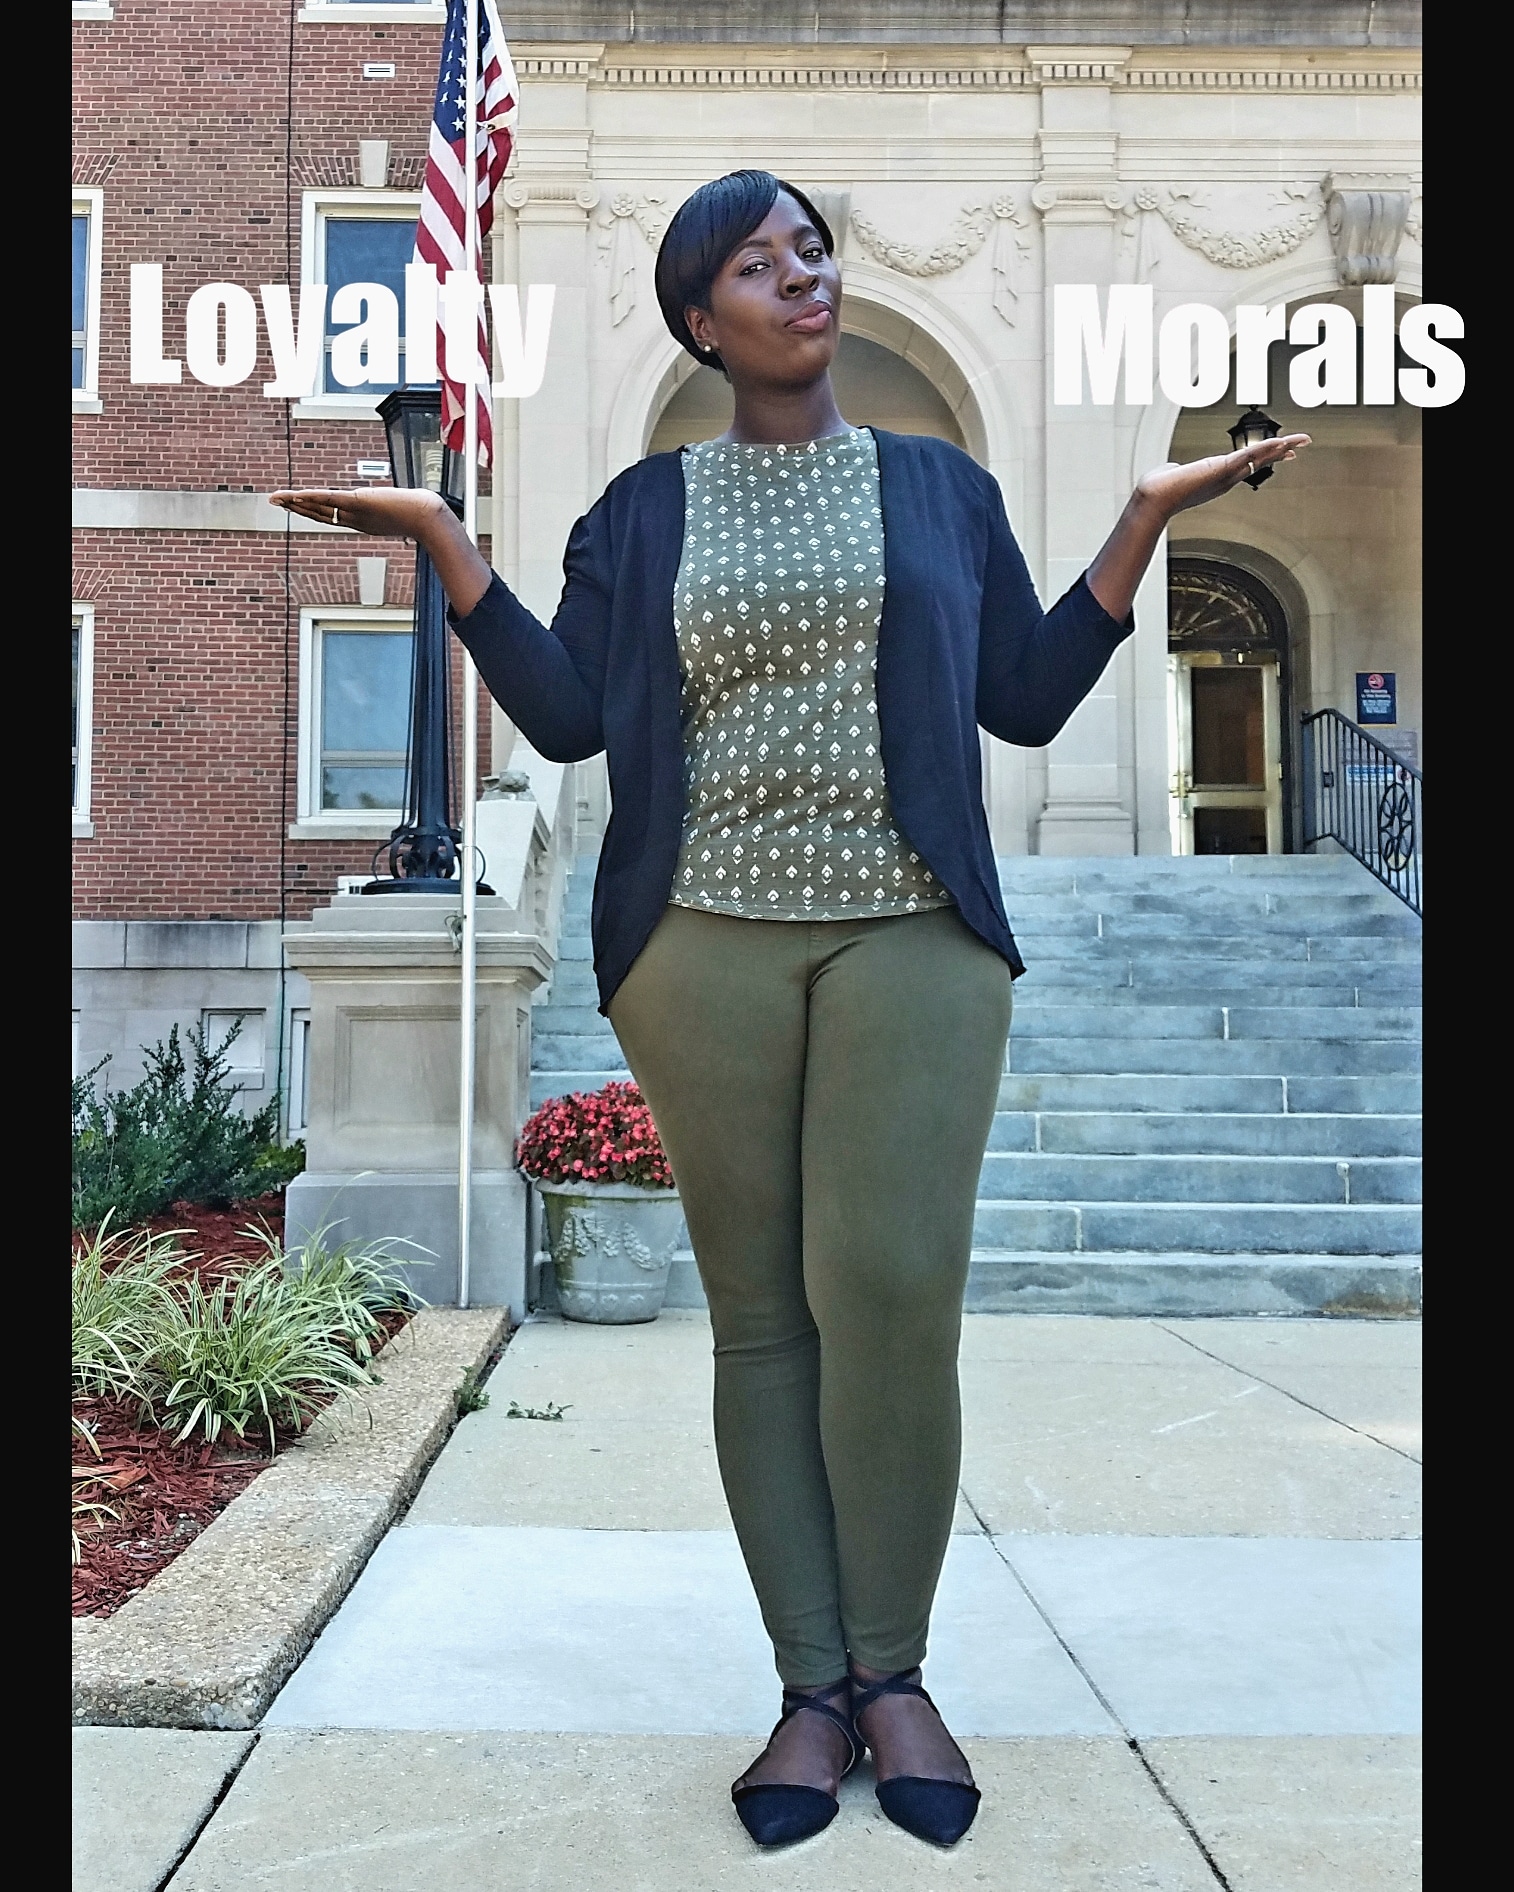 LOYALTY OR MORALS